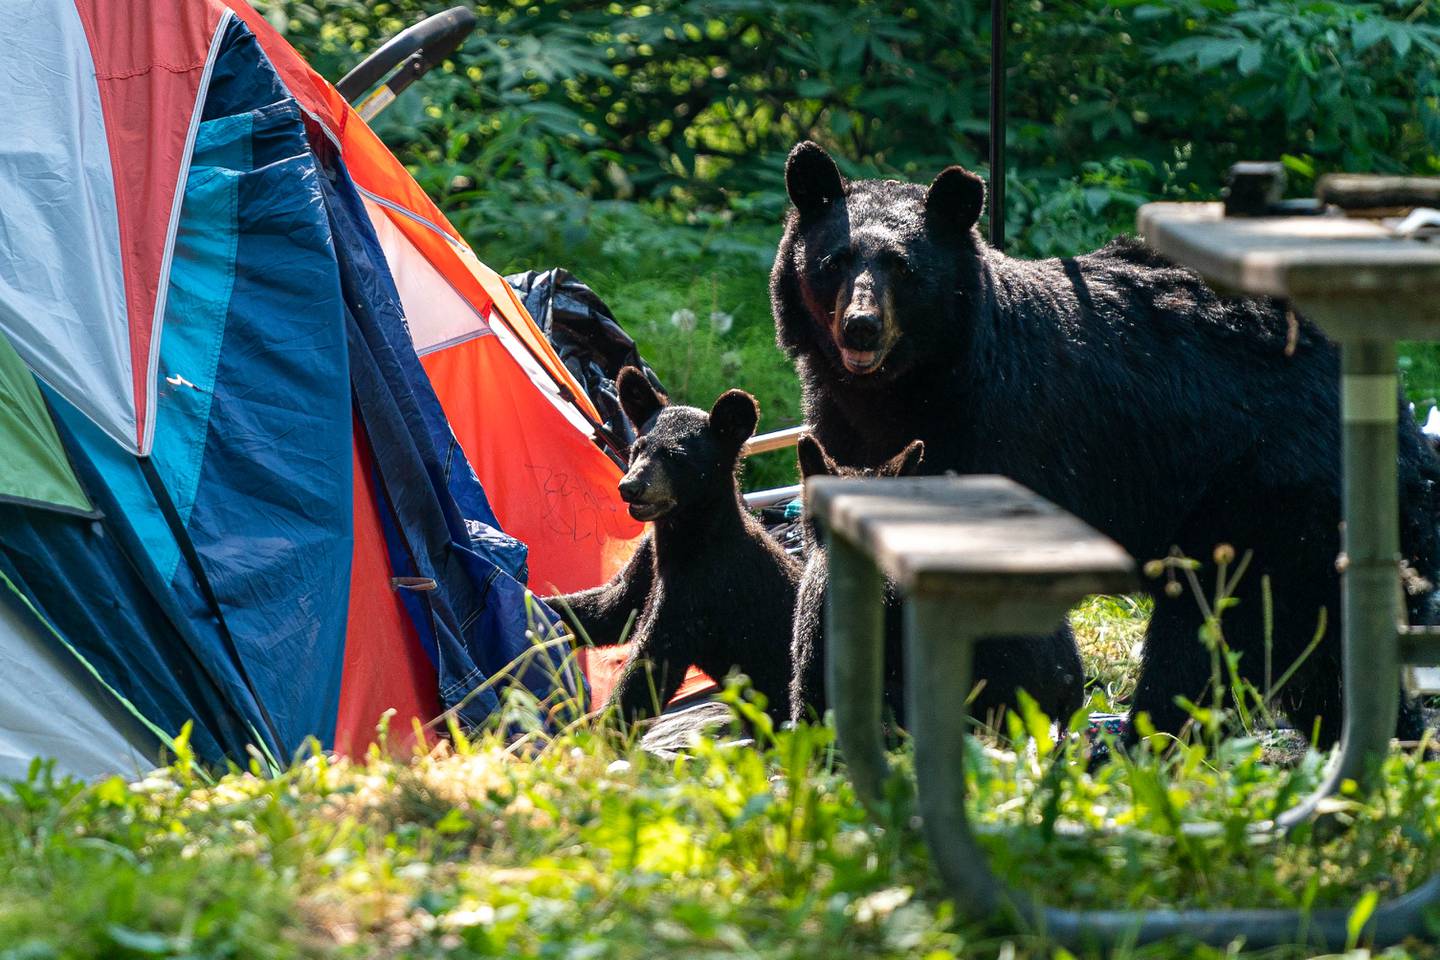 Centennial Park, bear, bear cub, bears, black bear, camp, campground, centennial campground, cub, homeless, homeless camp, homelessness